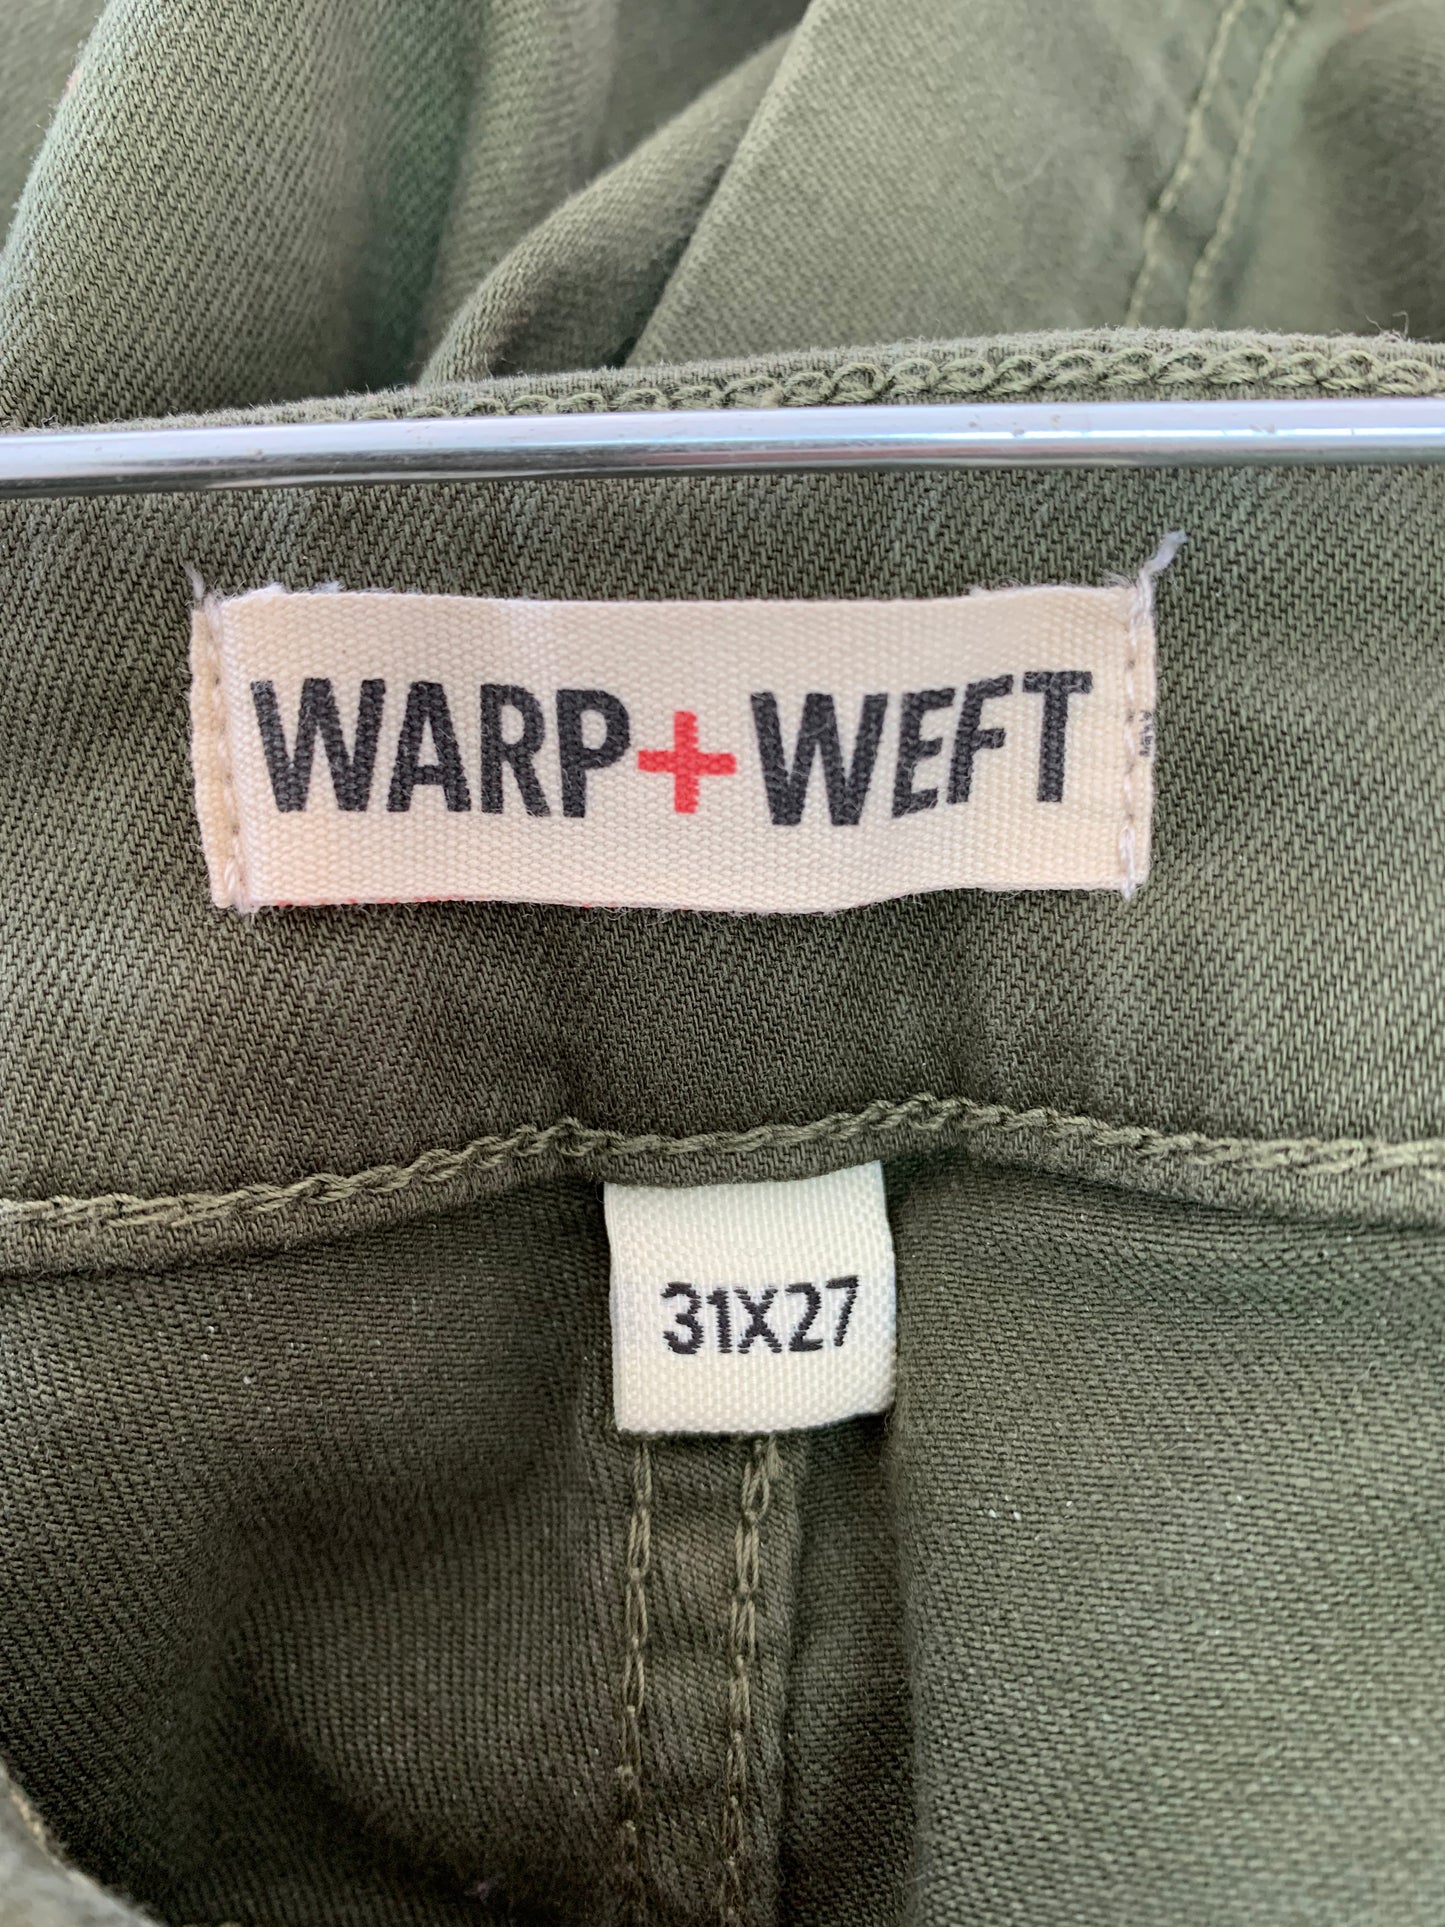 NWT - WARP + WEFT olive green ICN Incheon Wide Leg Pants - Size 31 x 27